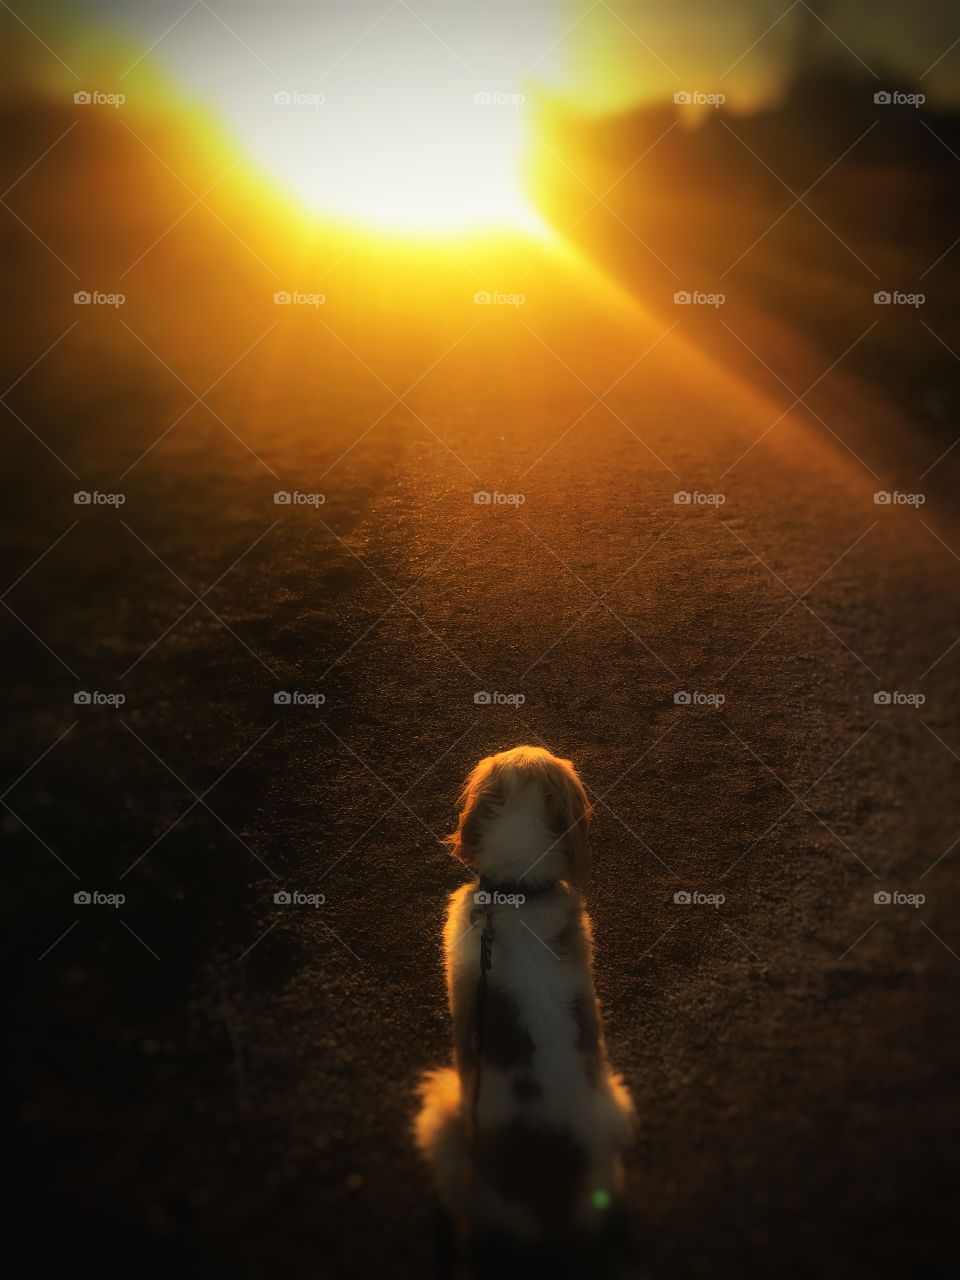 Dog in Sunset 